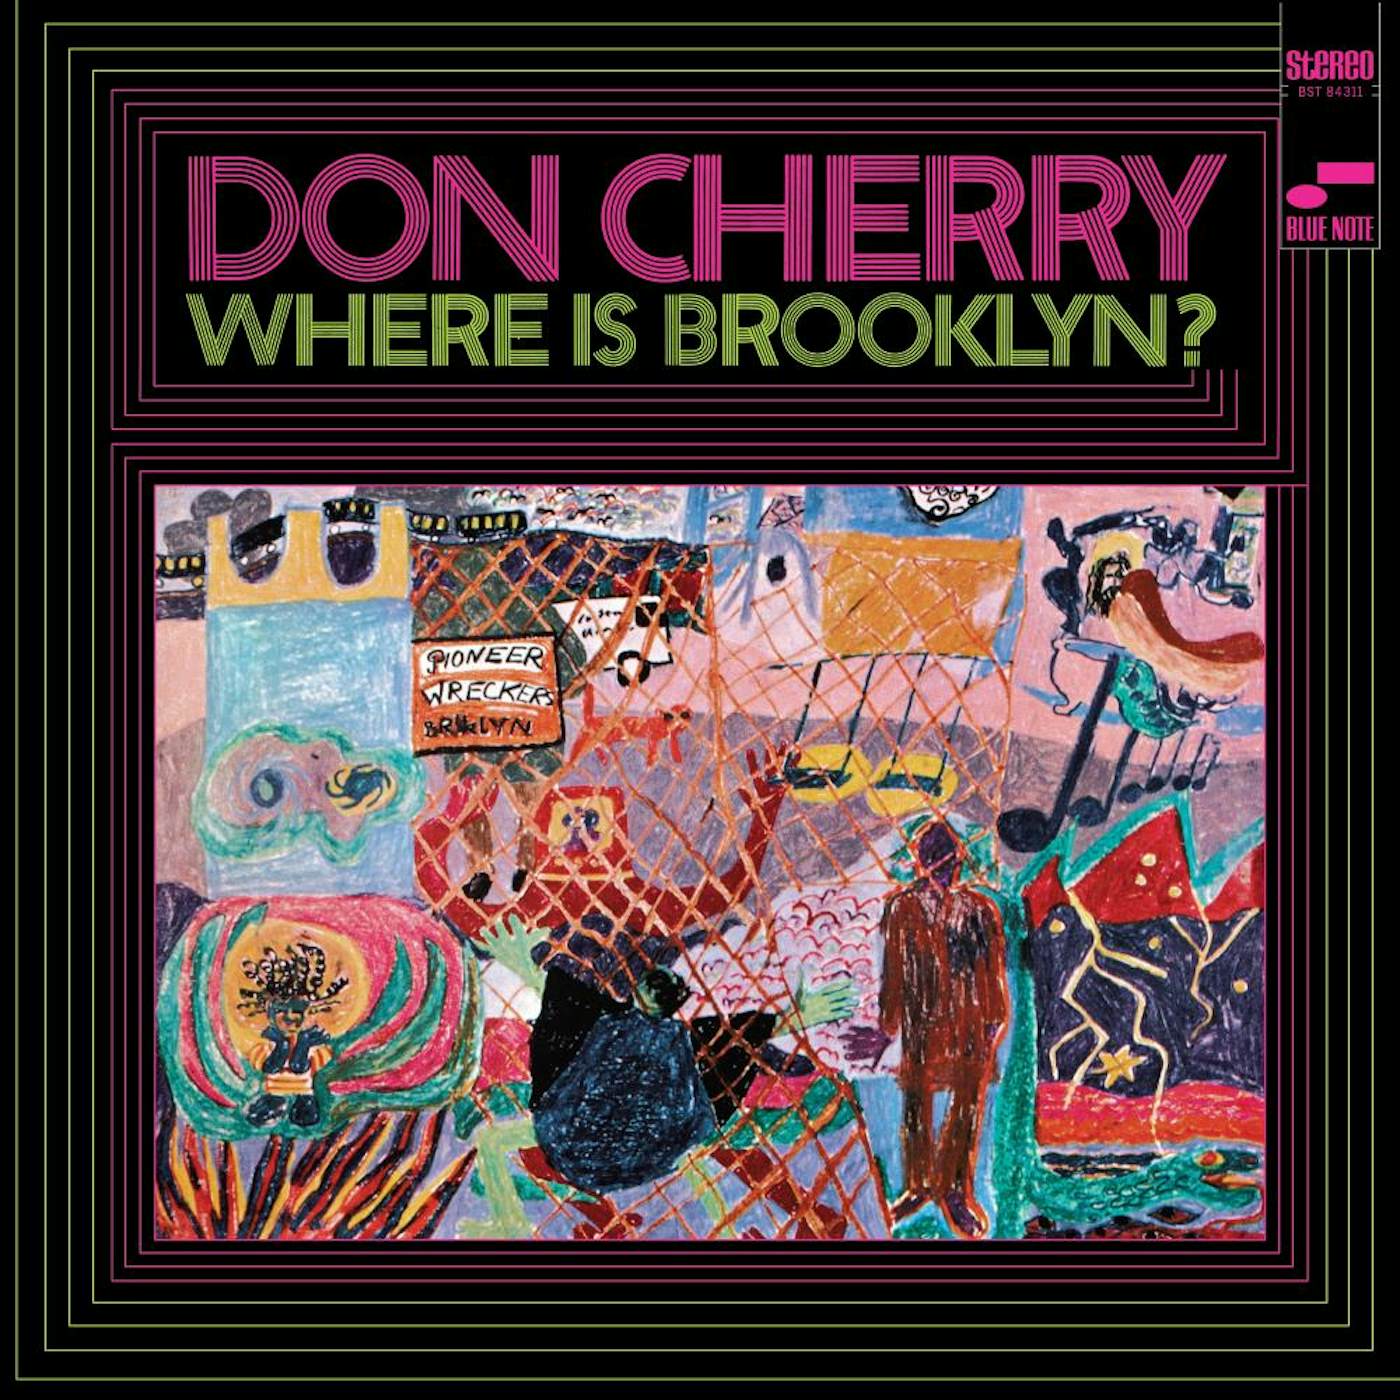 Don Cherry WHERE IS BROOKLYN? (BLUE NOTE CLASSIC VINYL SERIES) Vinyl Record